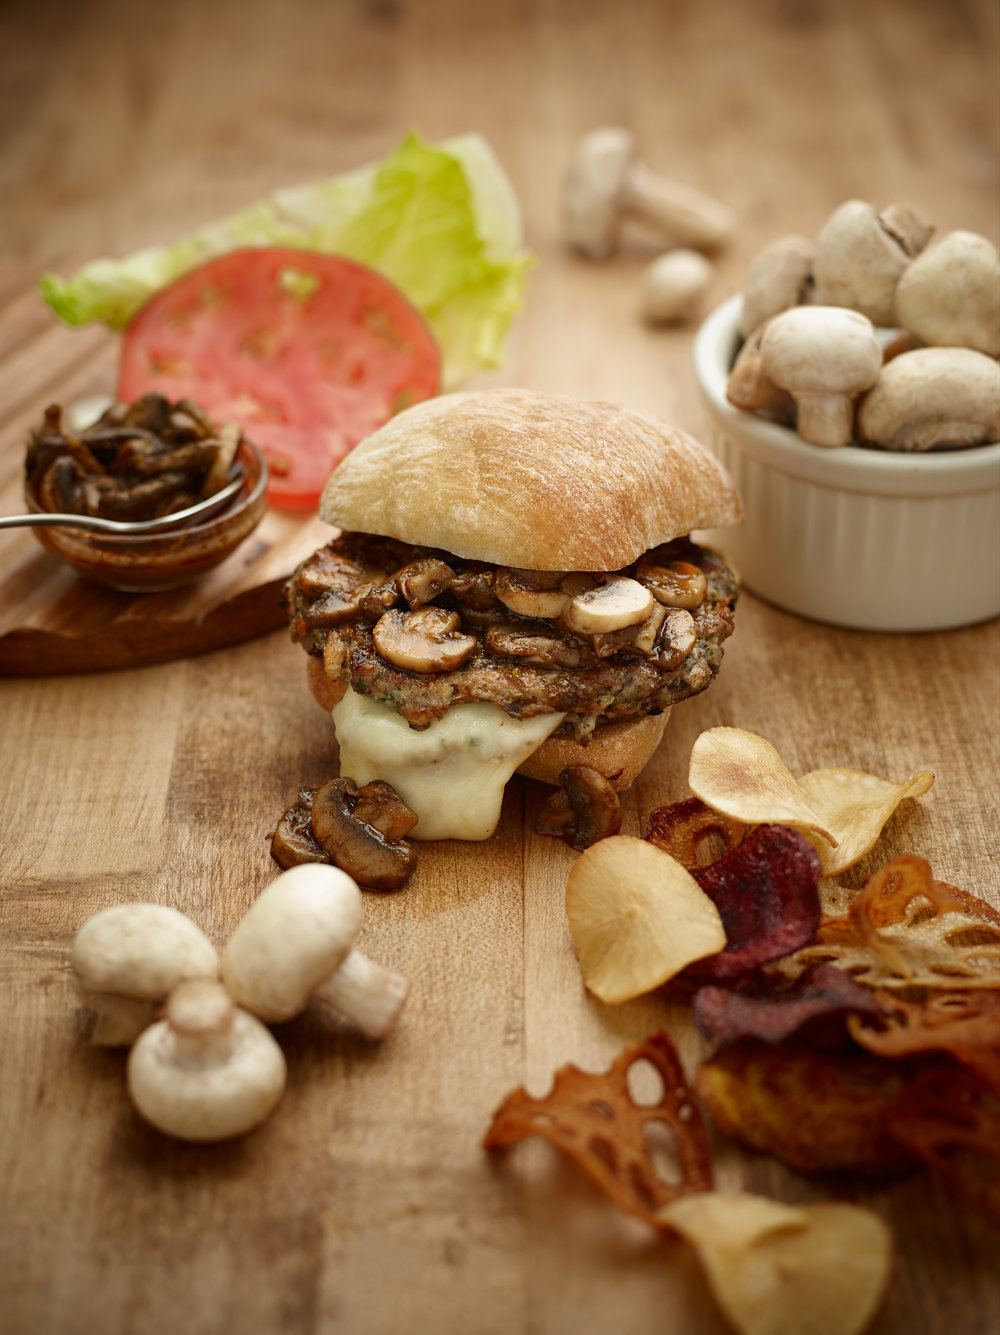 Veal mushroom cheese burger